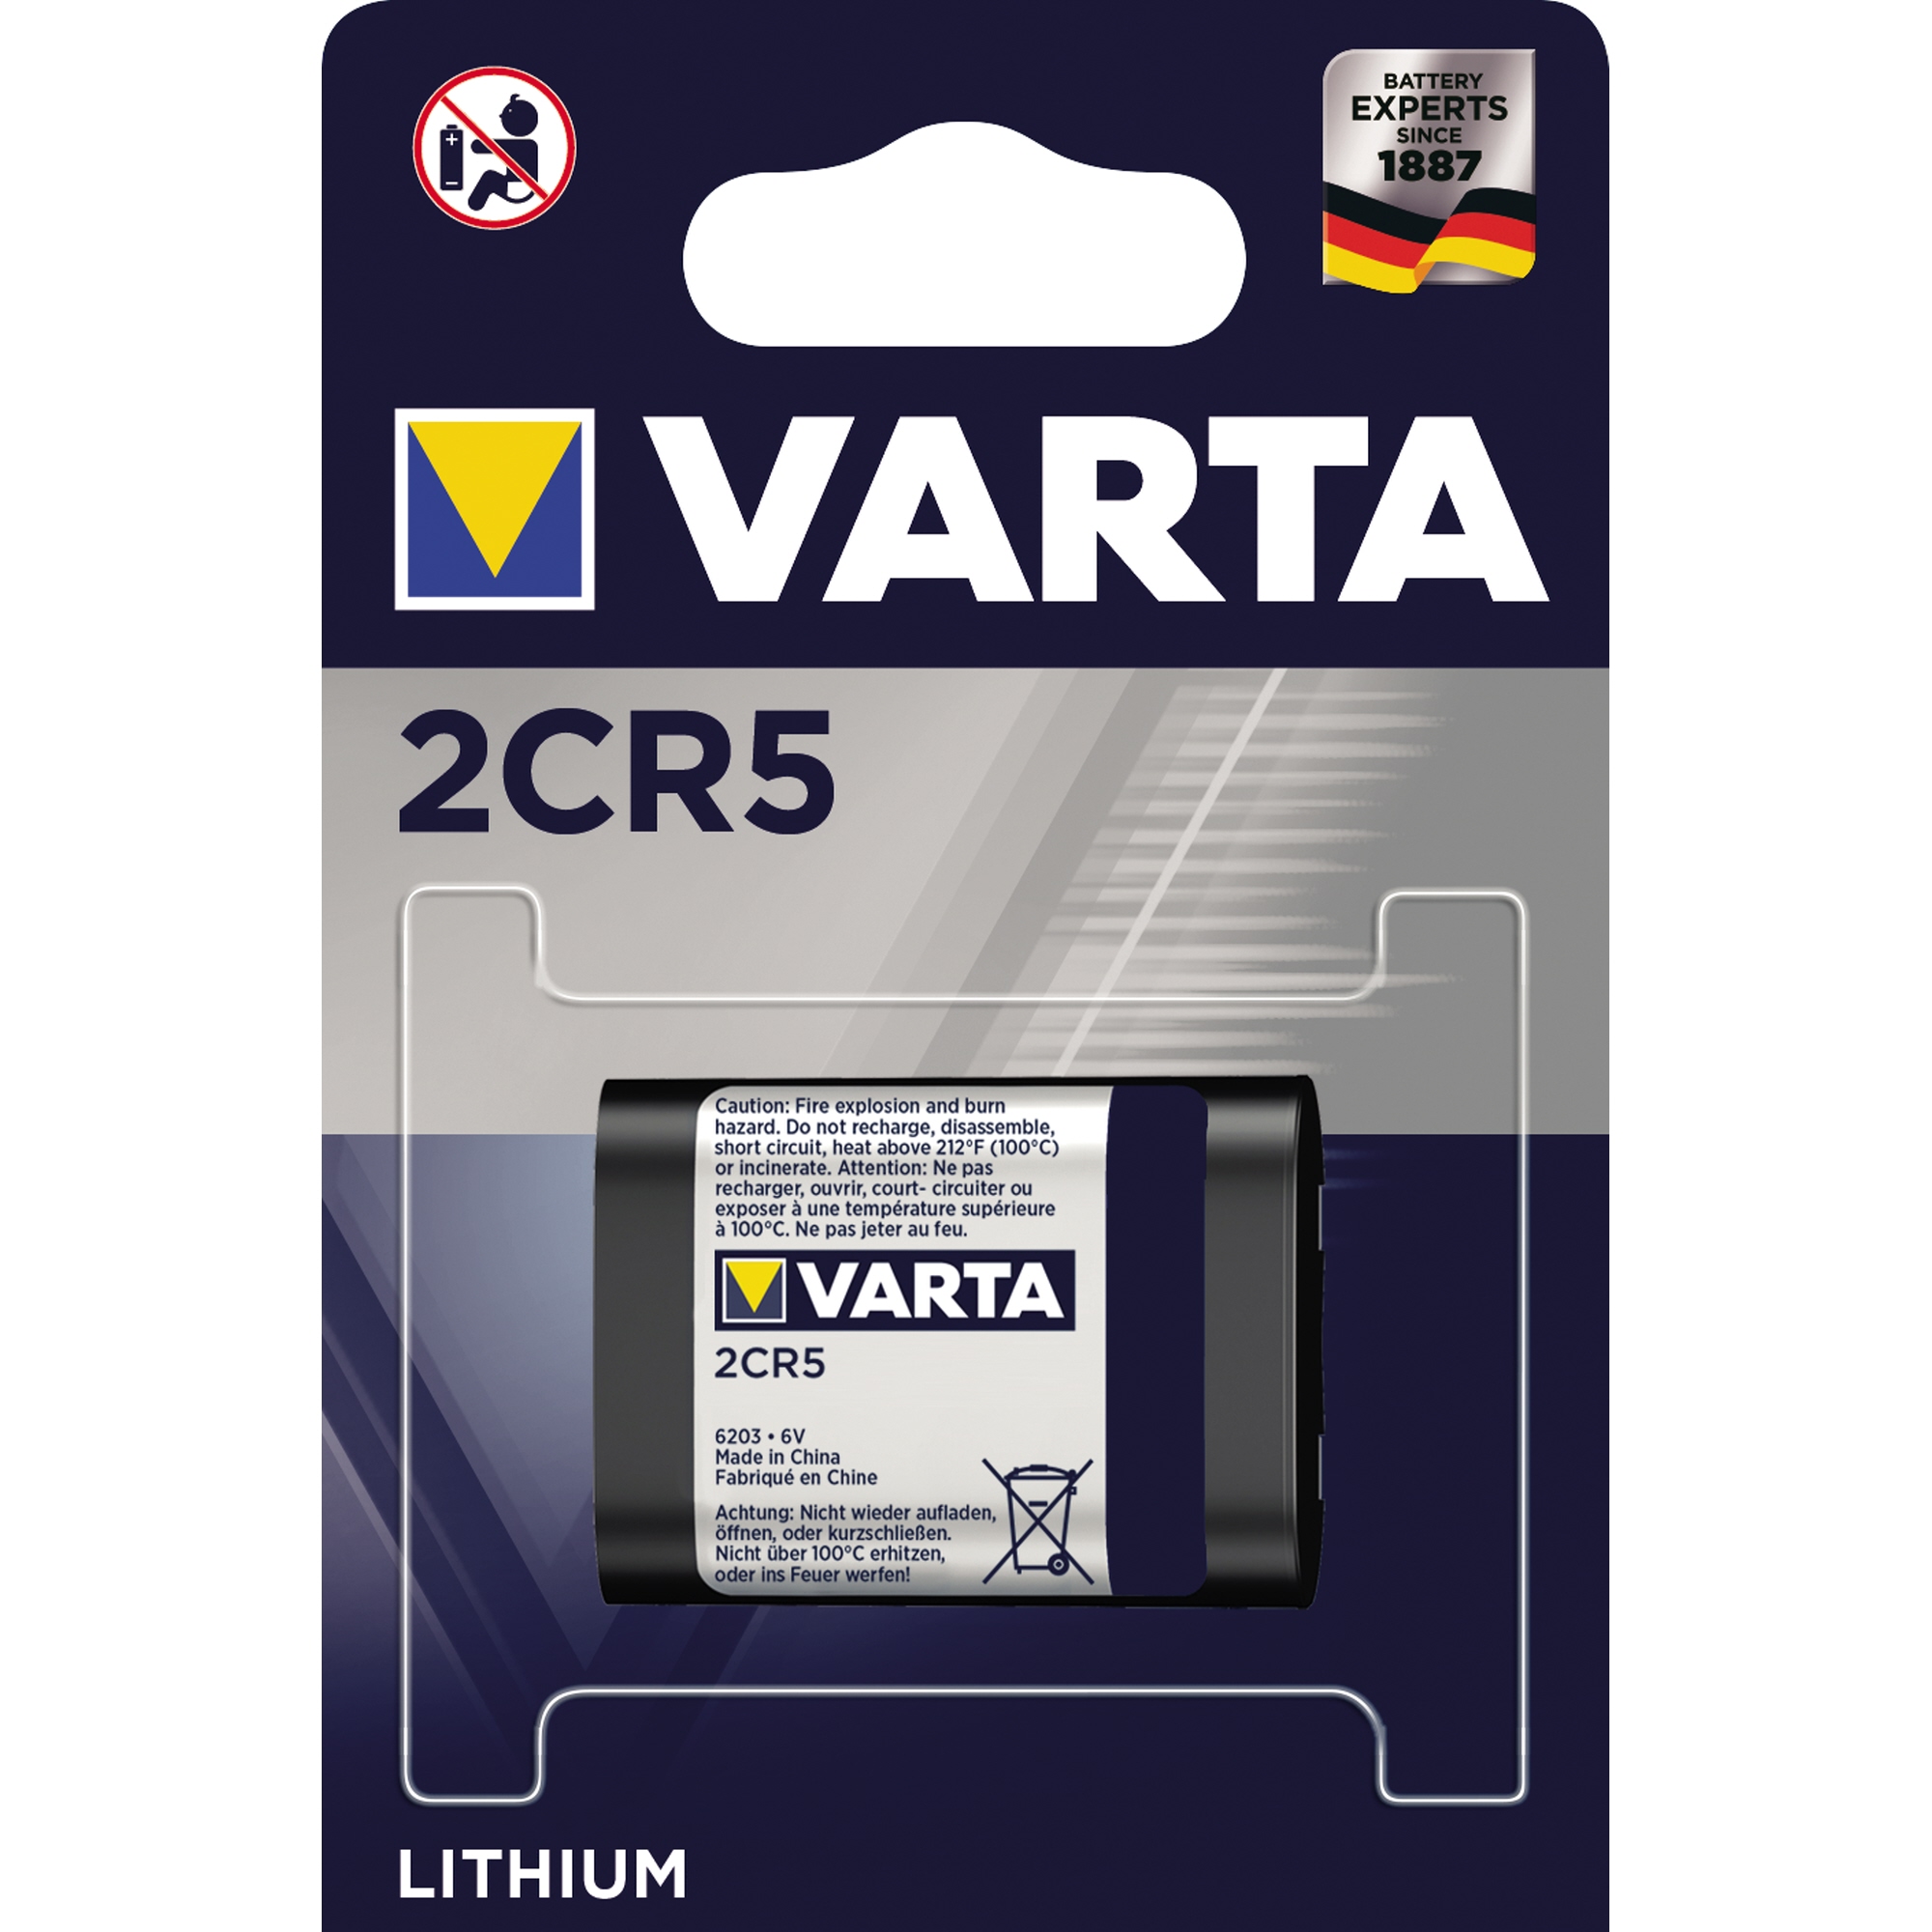 Varta Batterie Lithium 39-470-086 Photo 6V